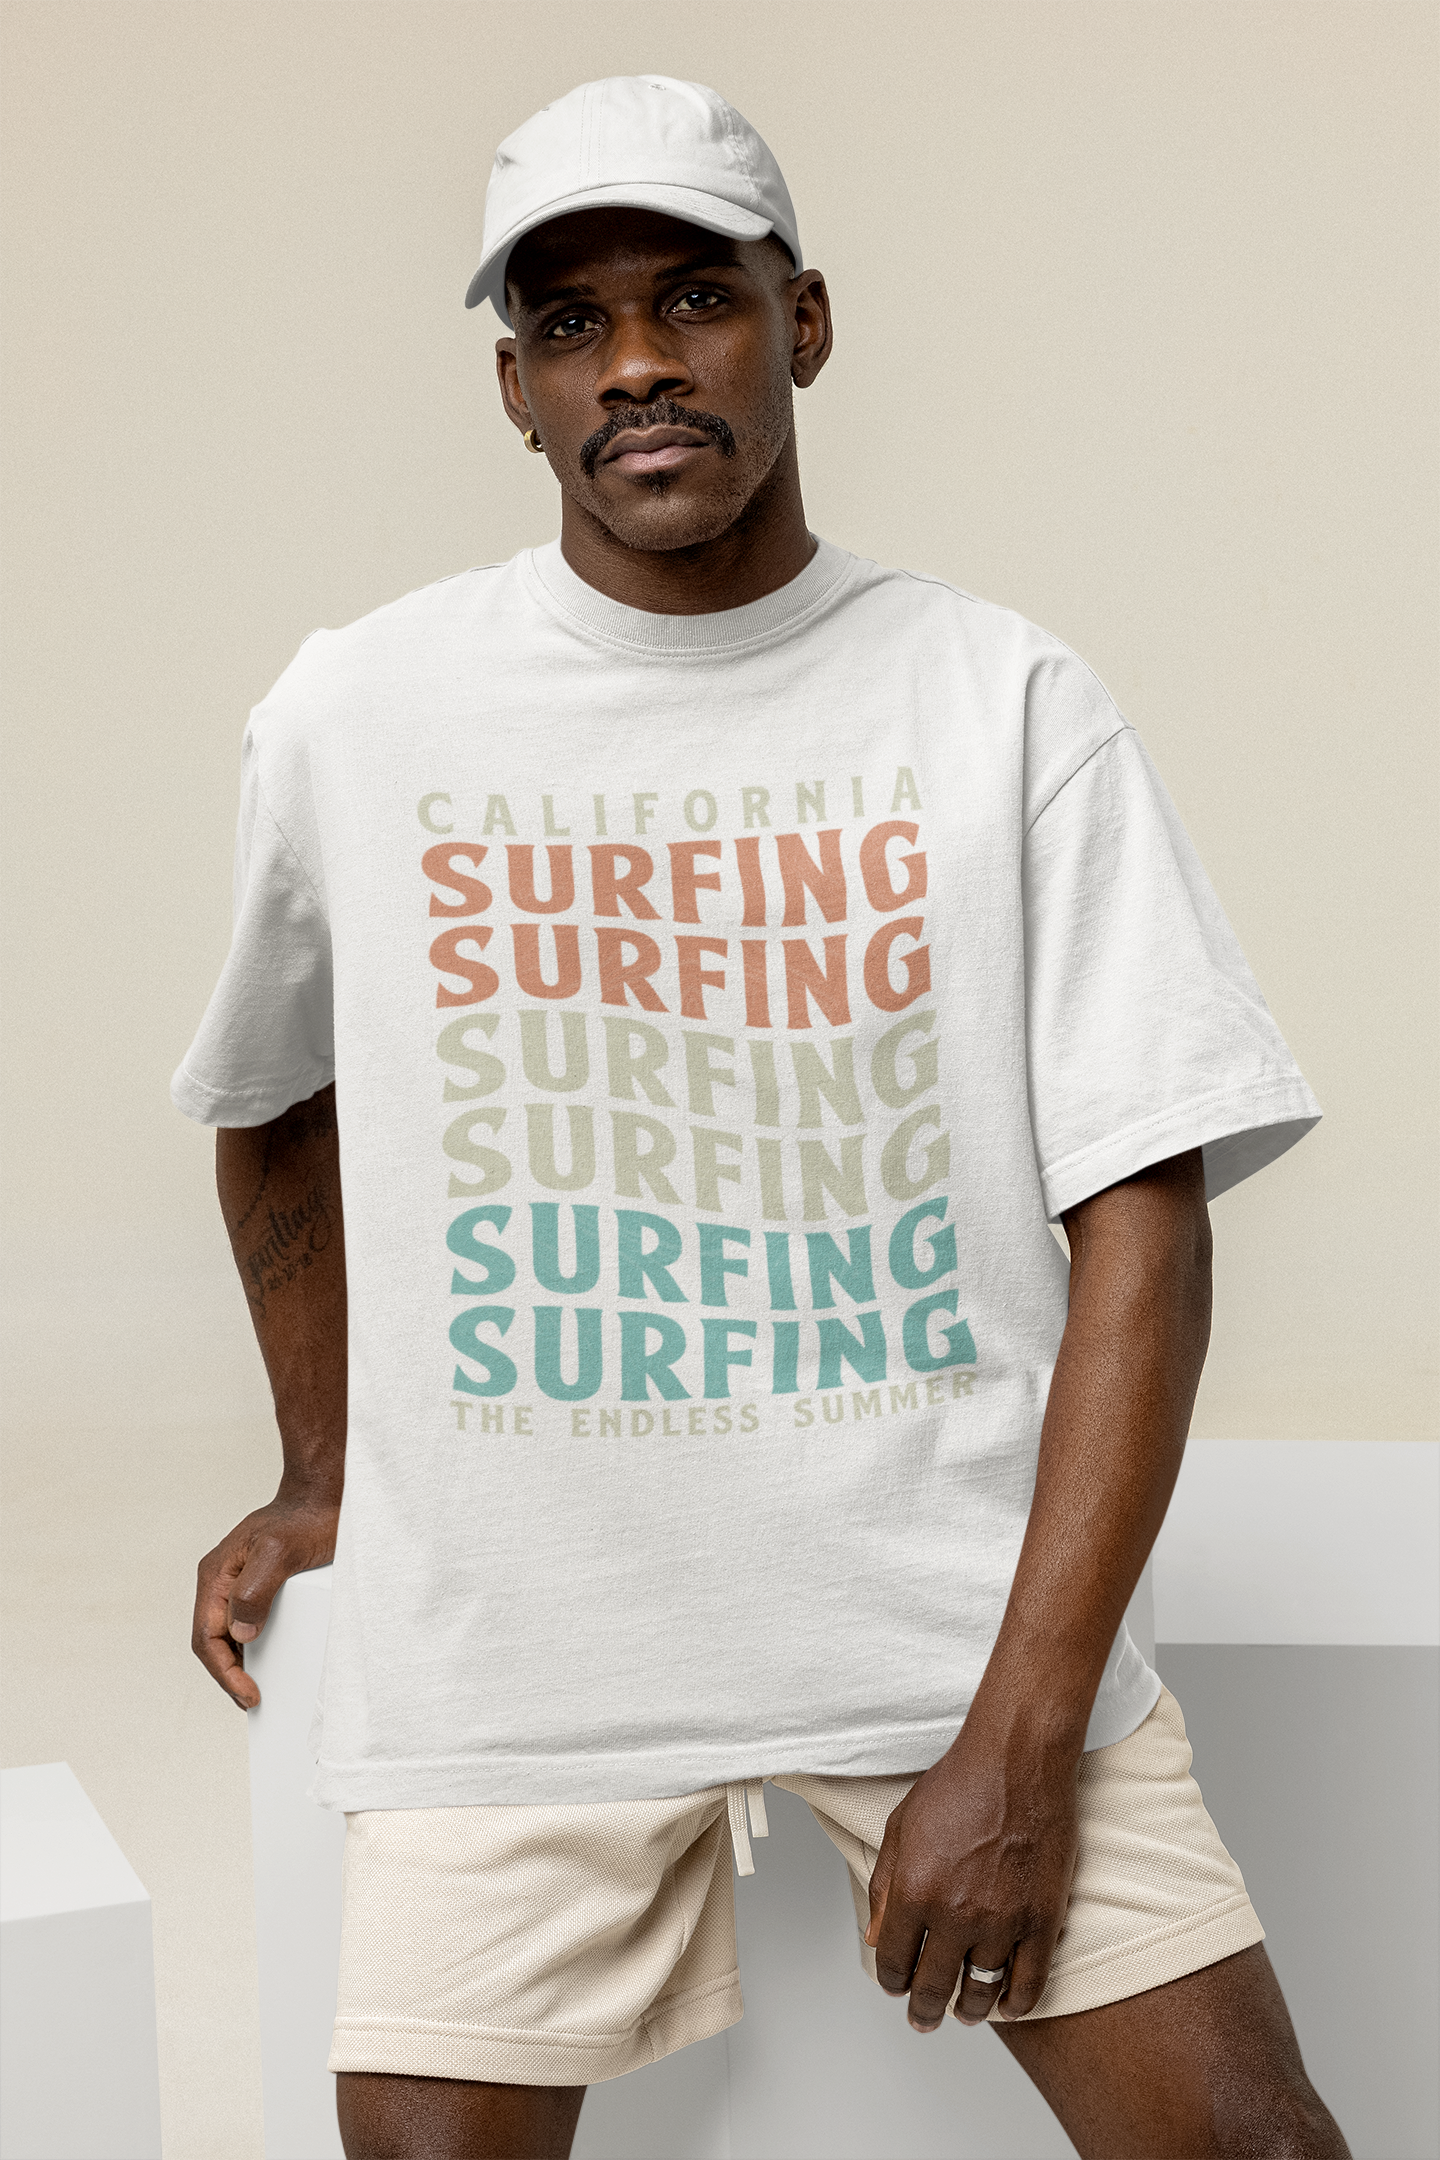 "California Surfing" Vintage Shirt